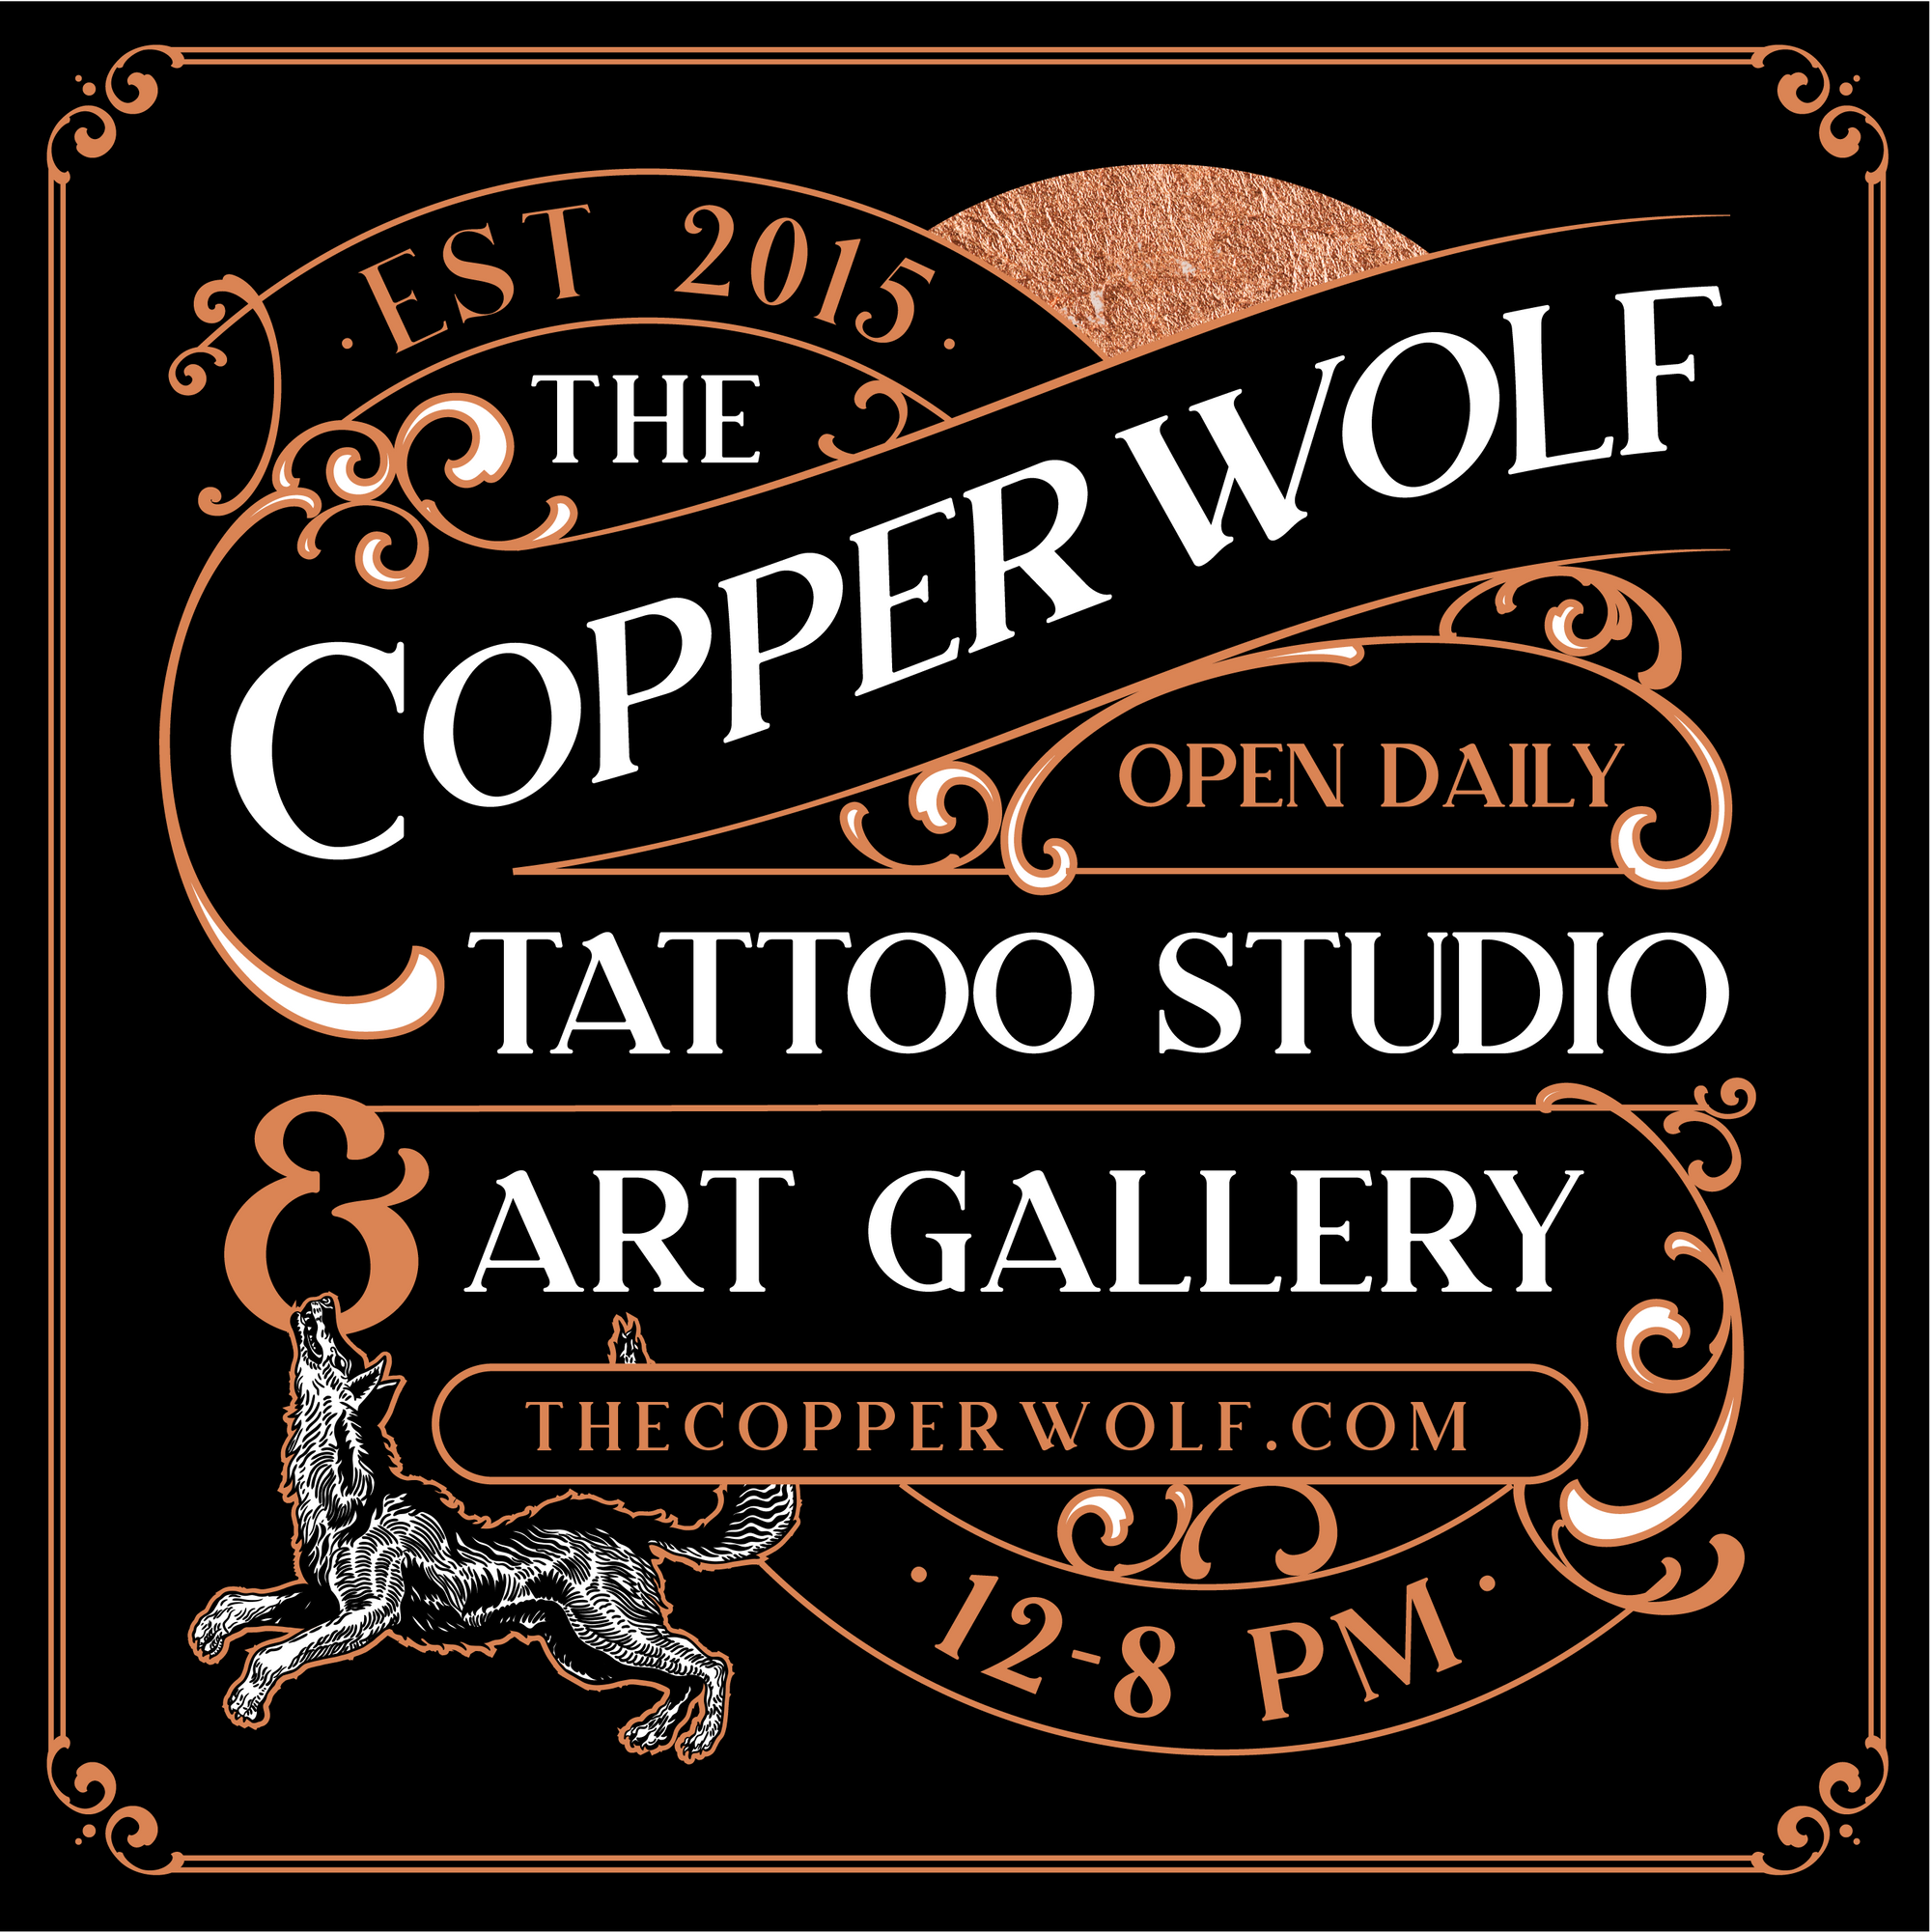 The Copper Wolf Tattoo Studio & Art Gallery, Tumwater Washington Open Daily 12-8 PM